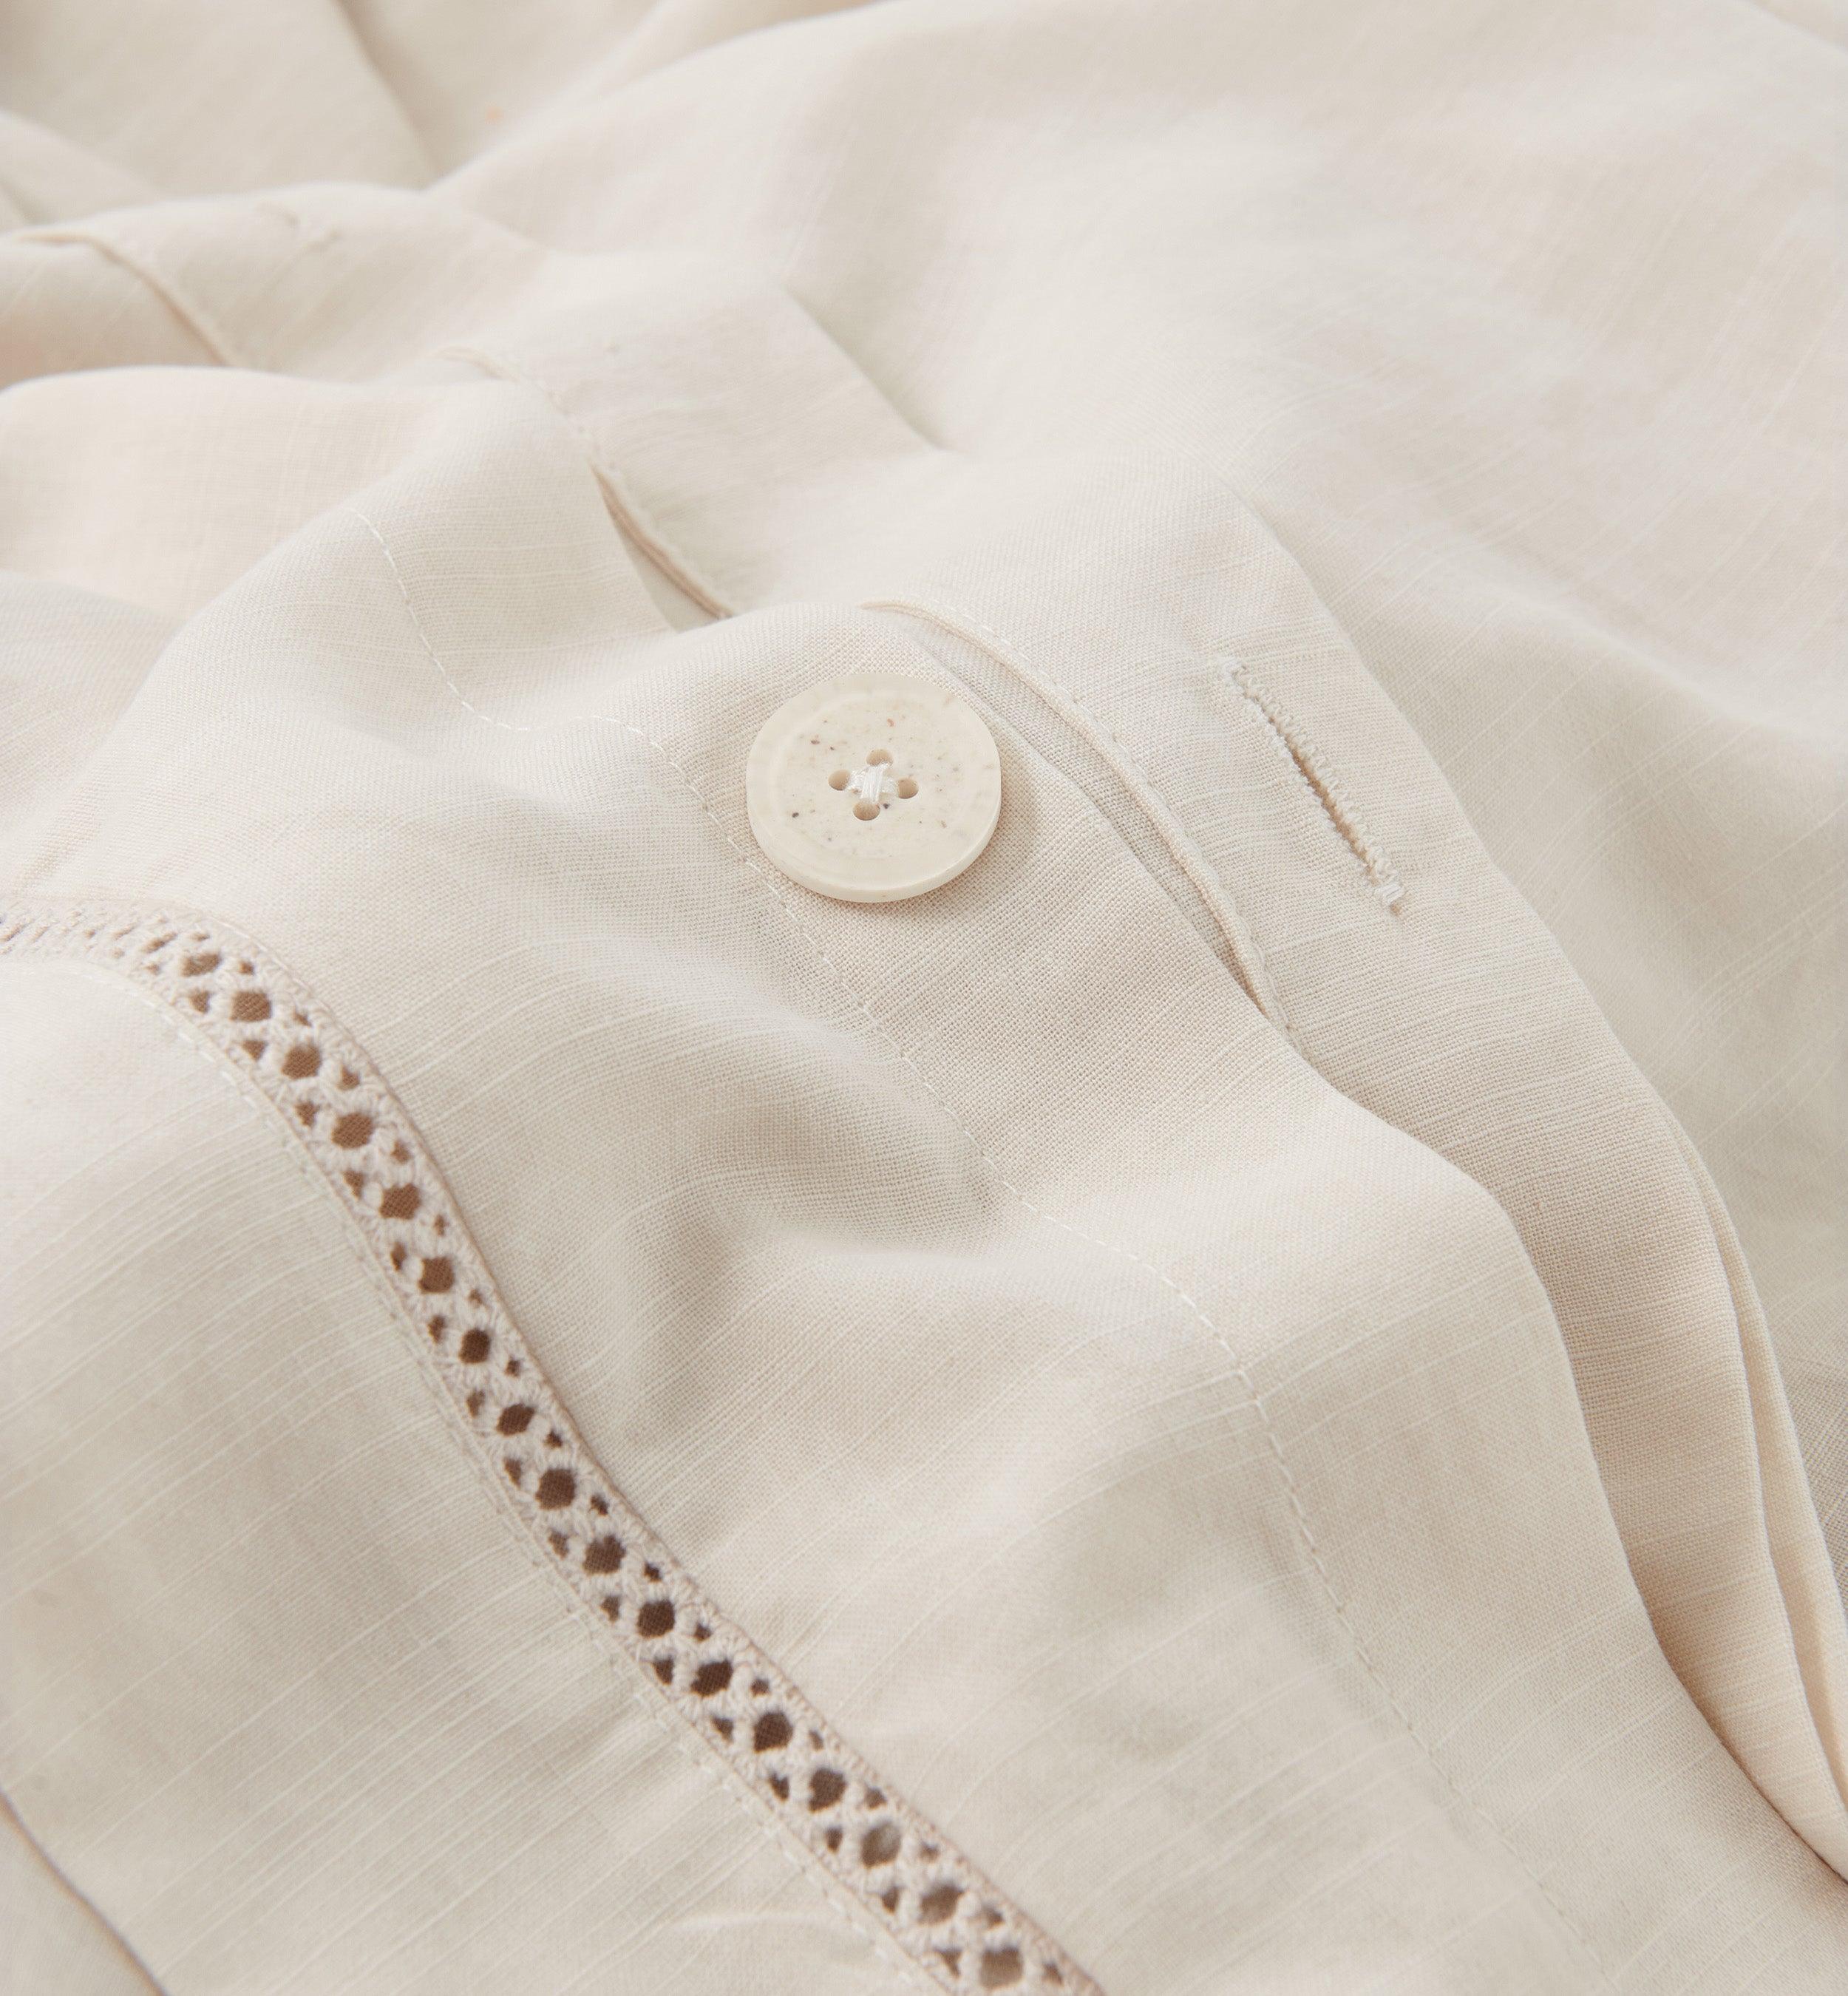 Linen Lyocell Duvet Cover Set - Double Stitch By Bedsure